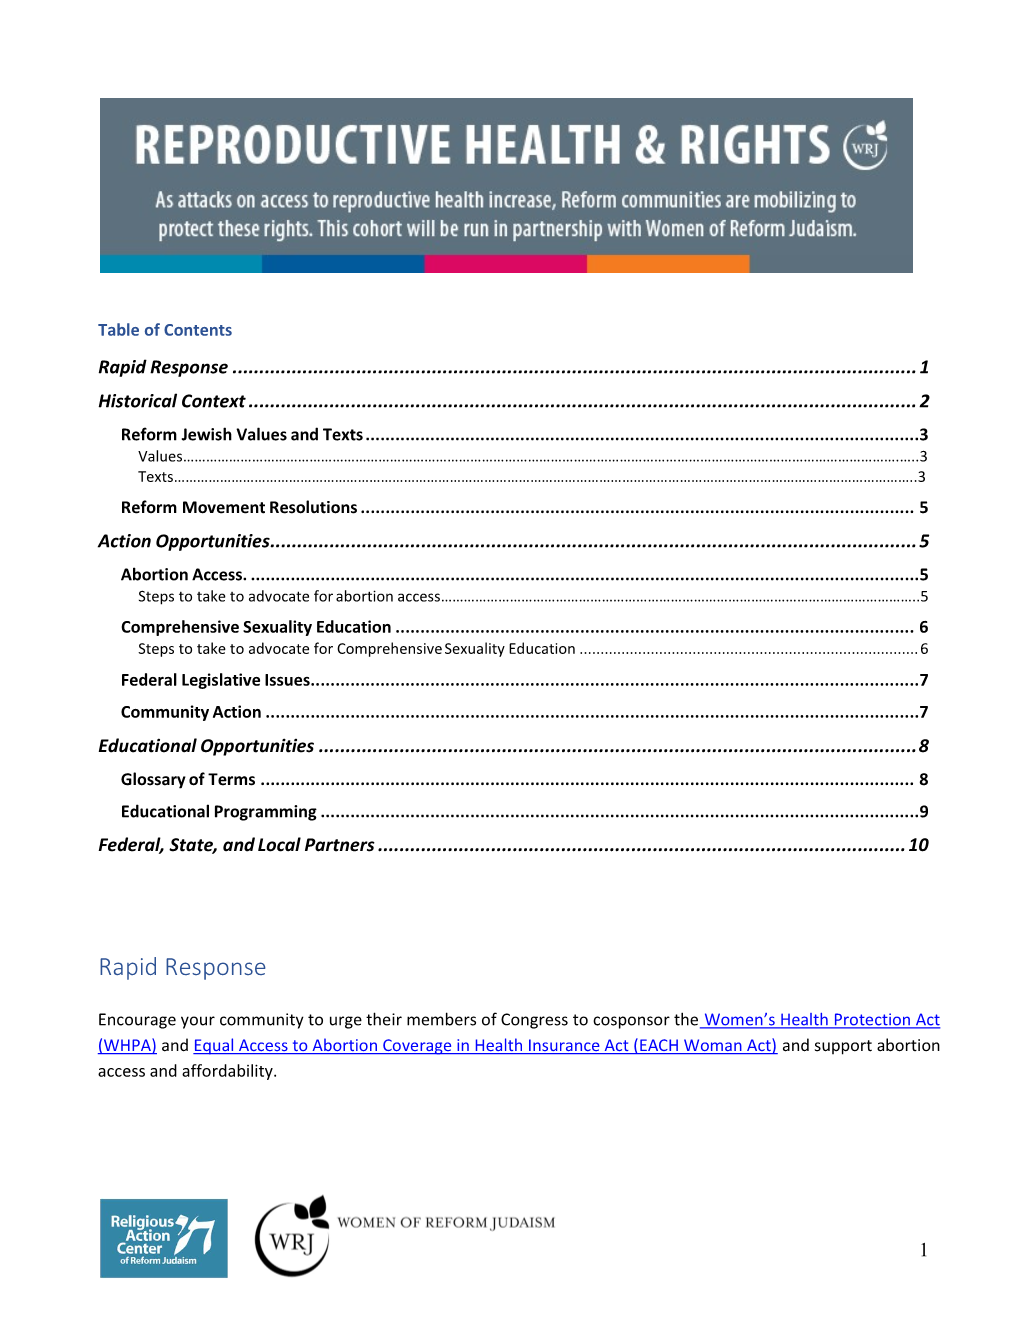 WRJ-RAC Reproductive Health & Rights